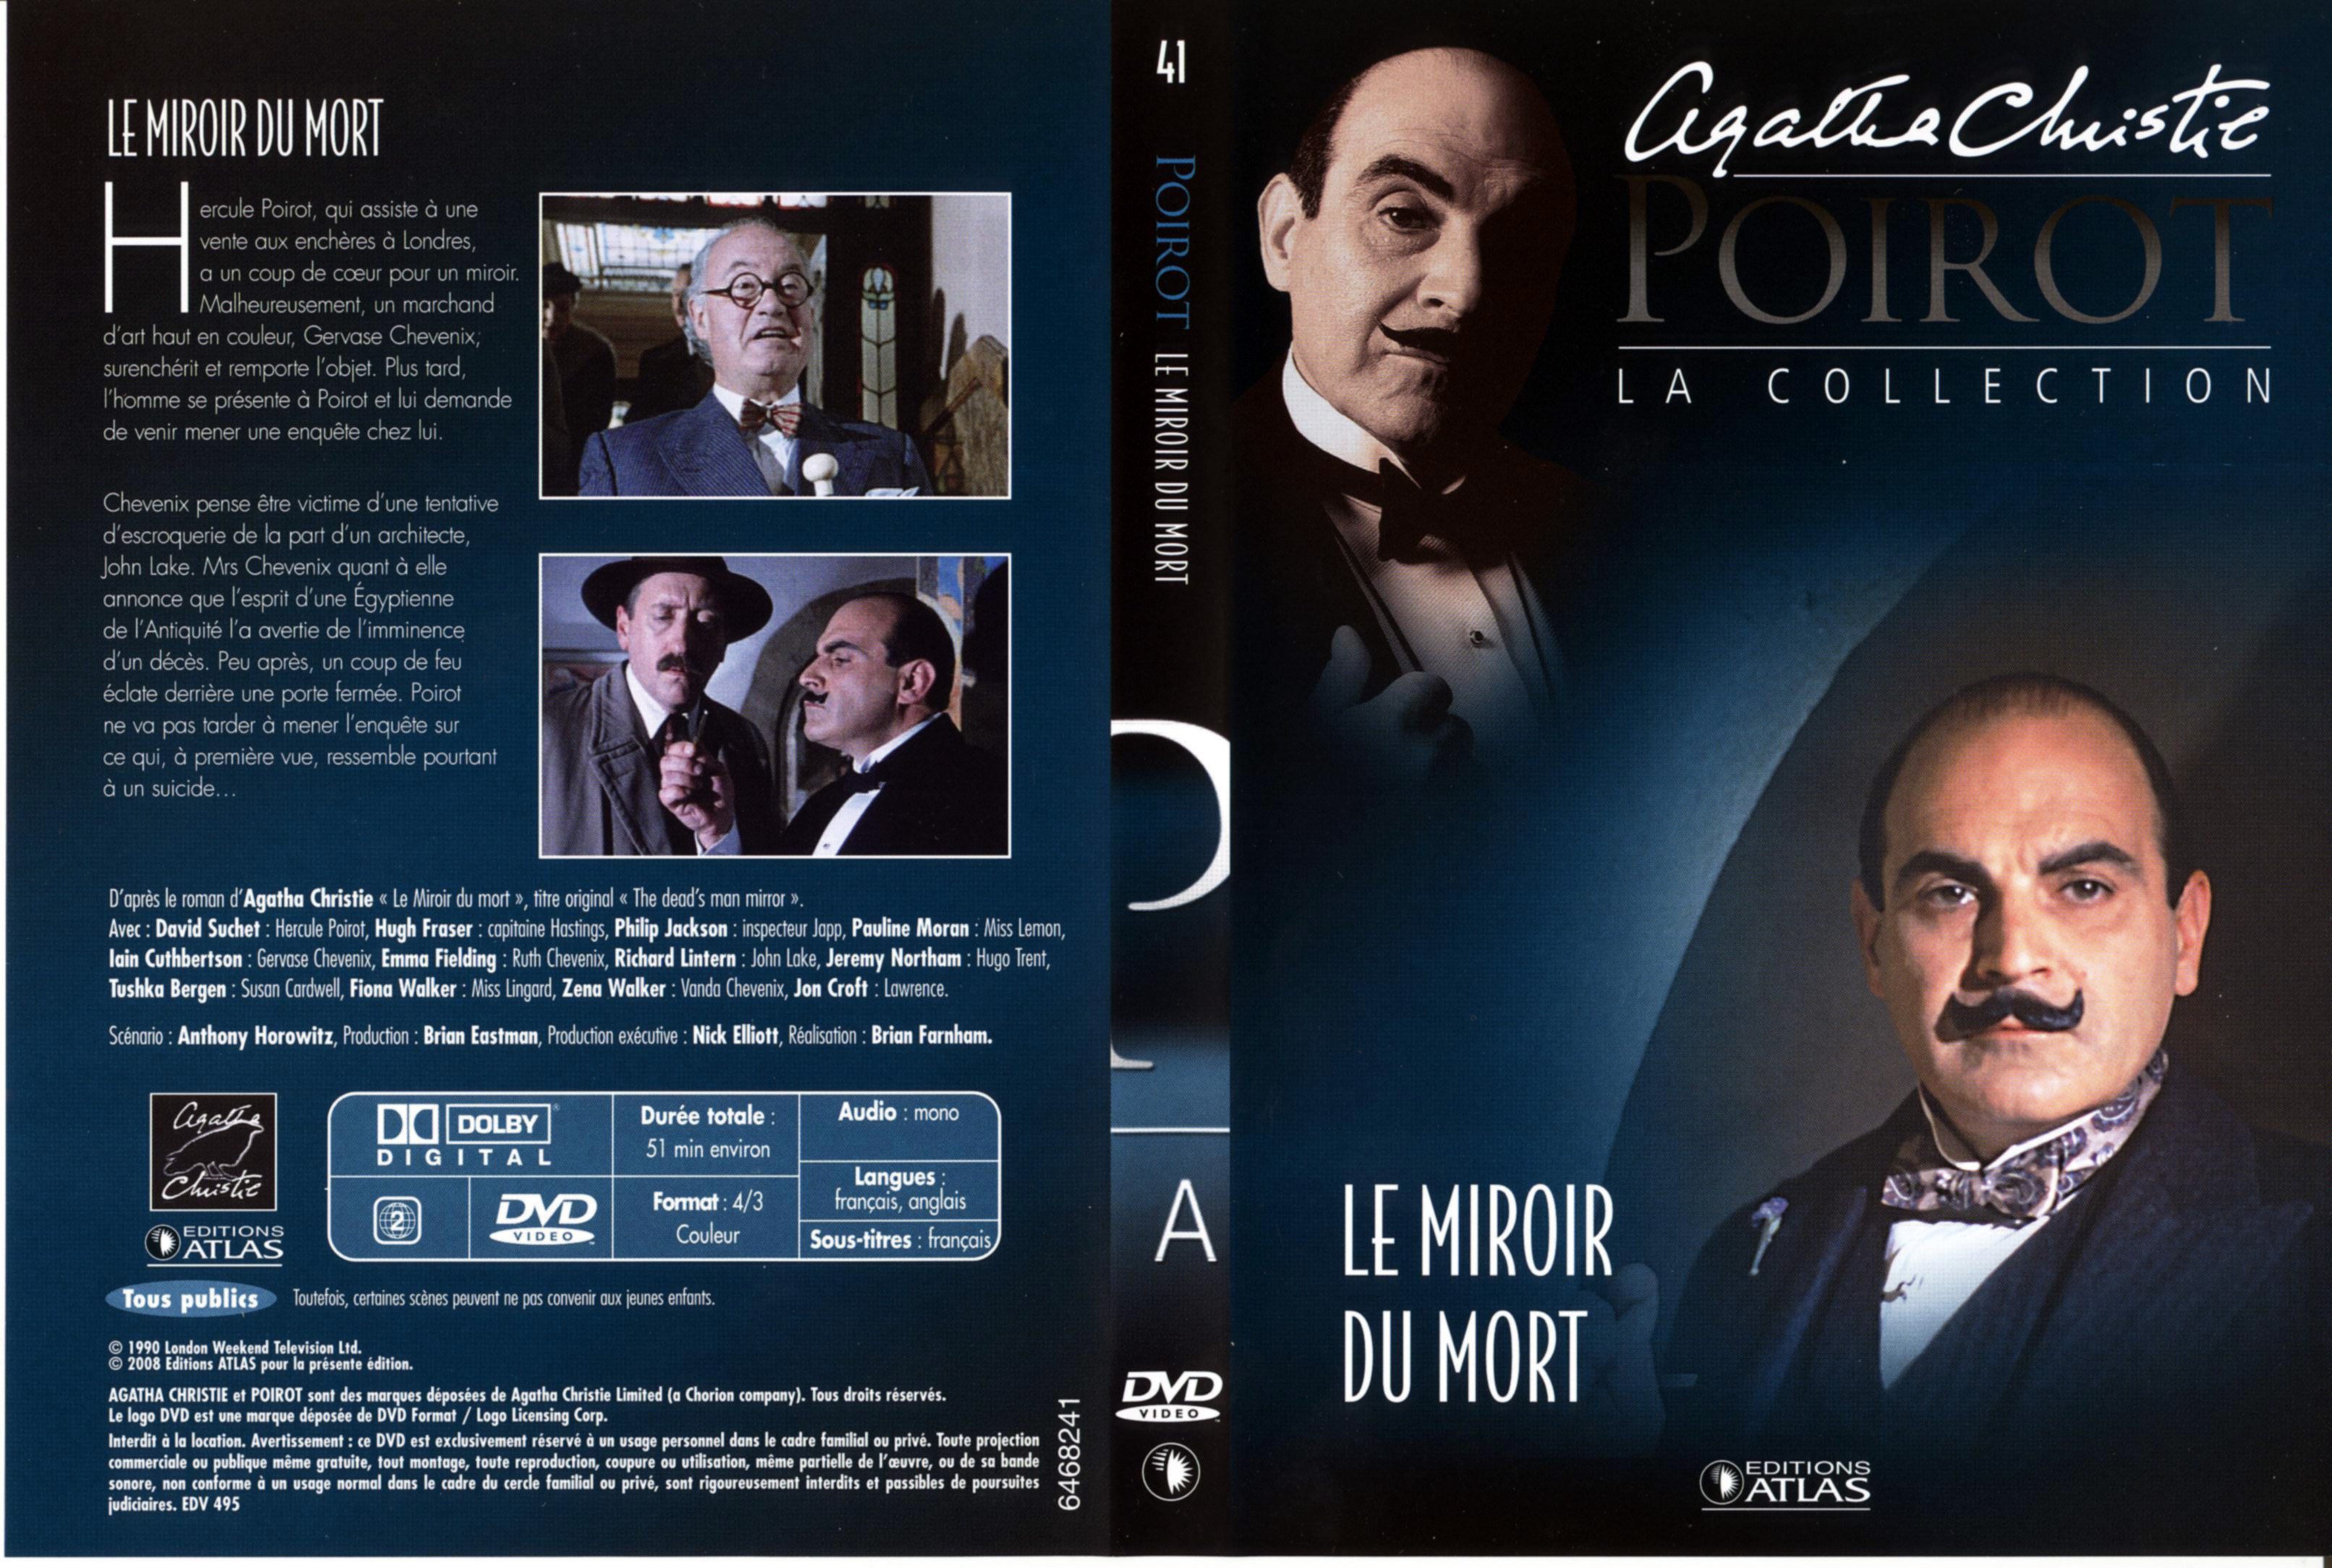 Jaquette DVD Hercule Poirot vol 41